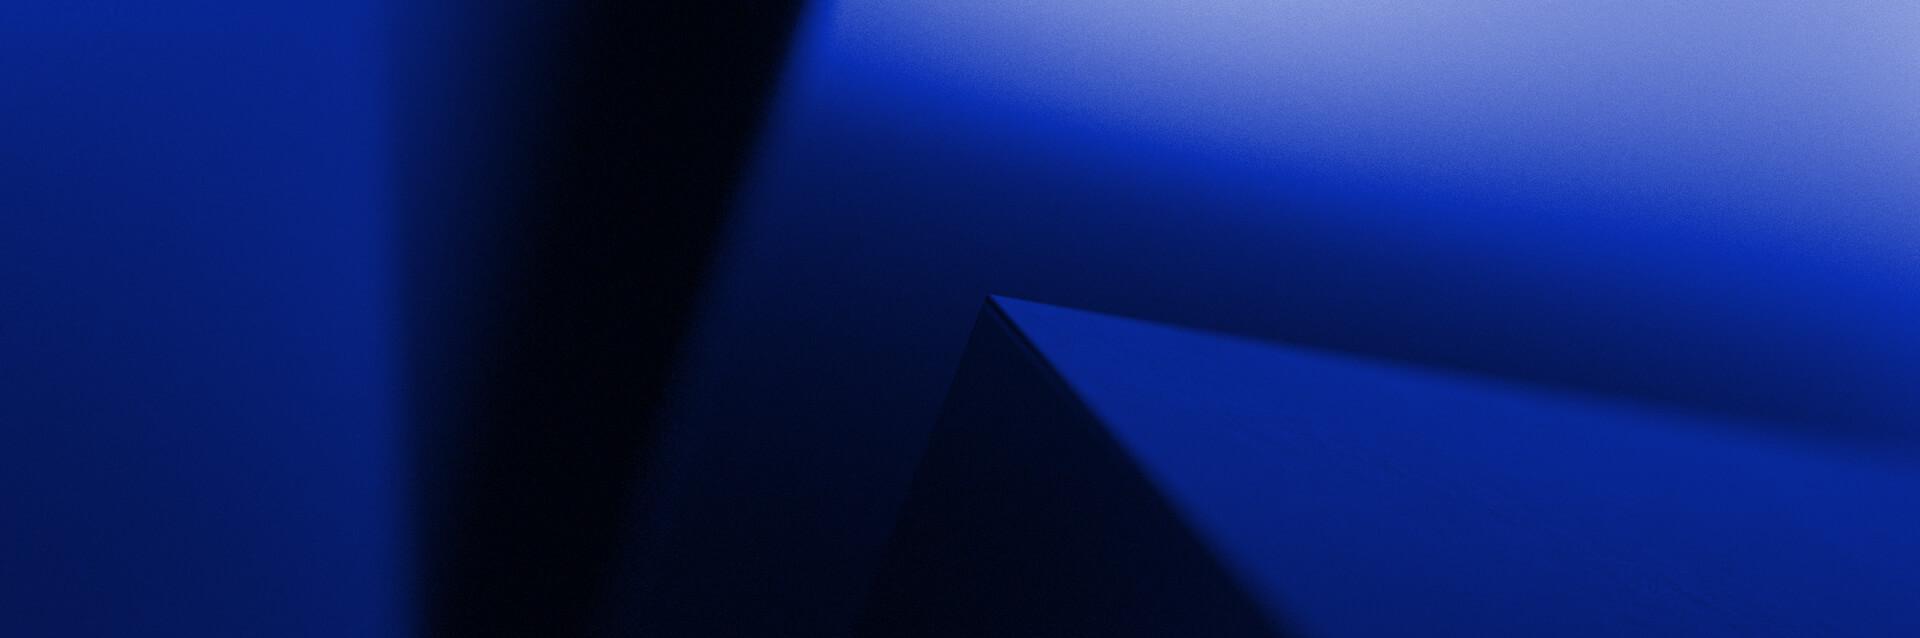 rra-background-blue-11-2021.jpg